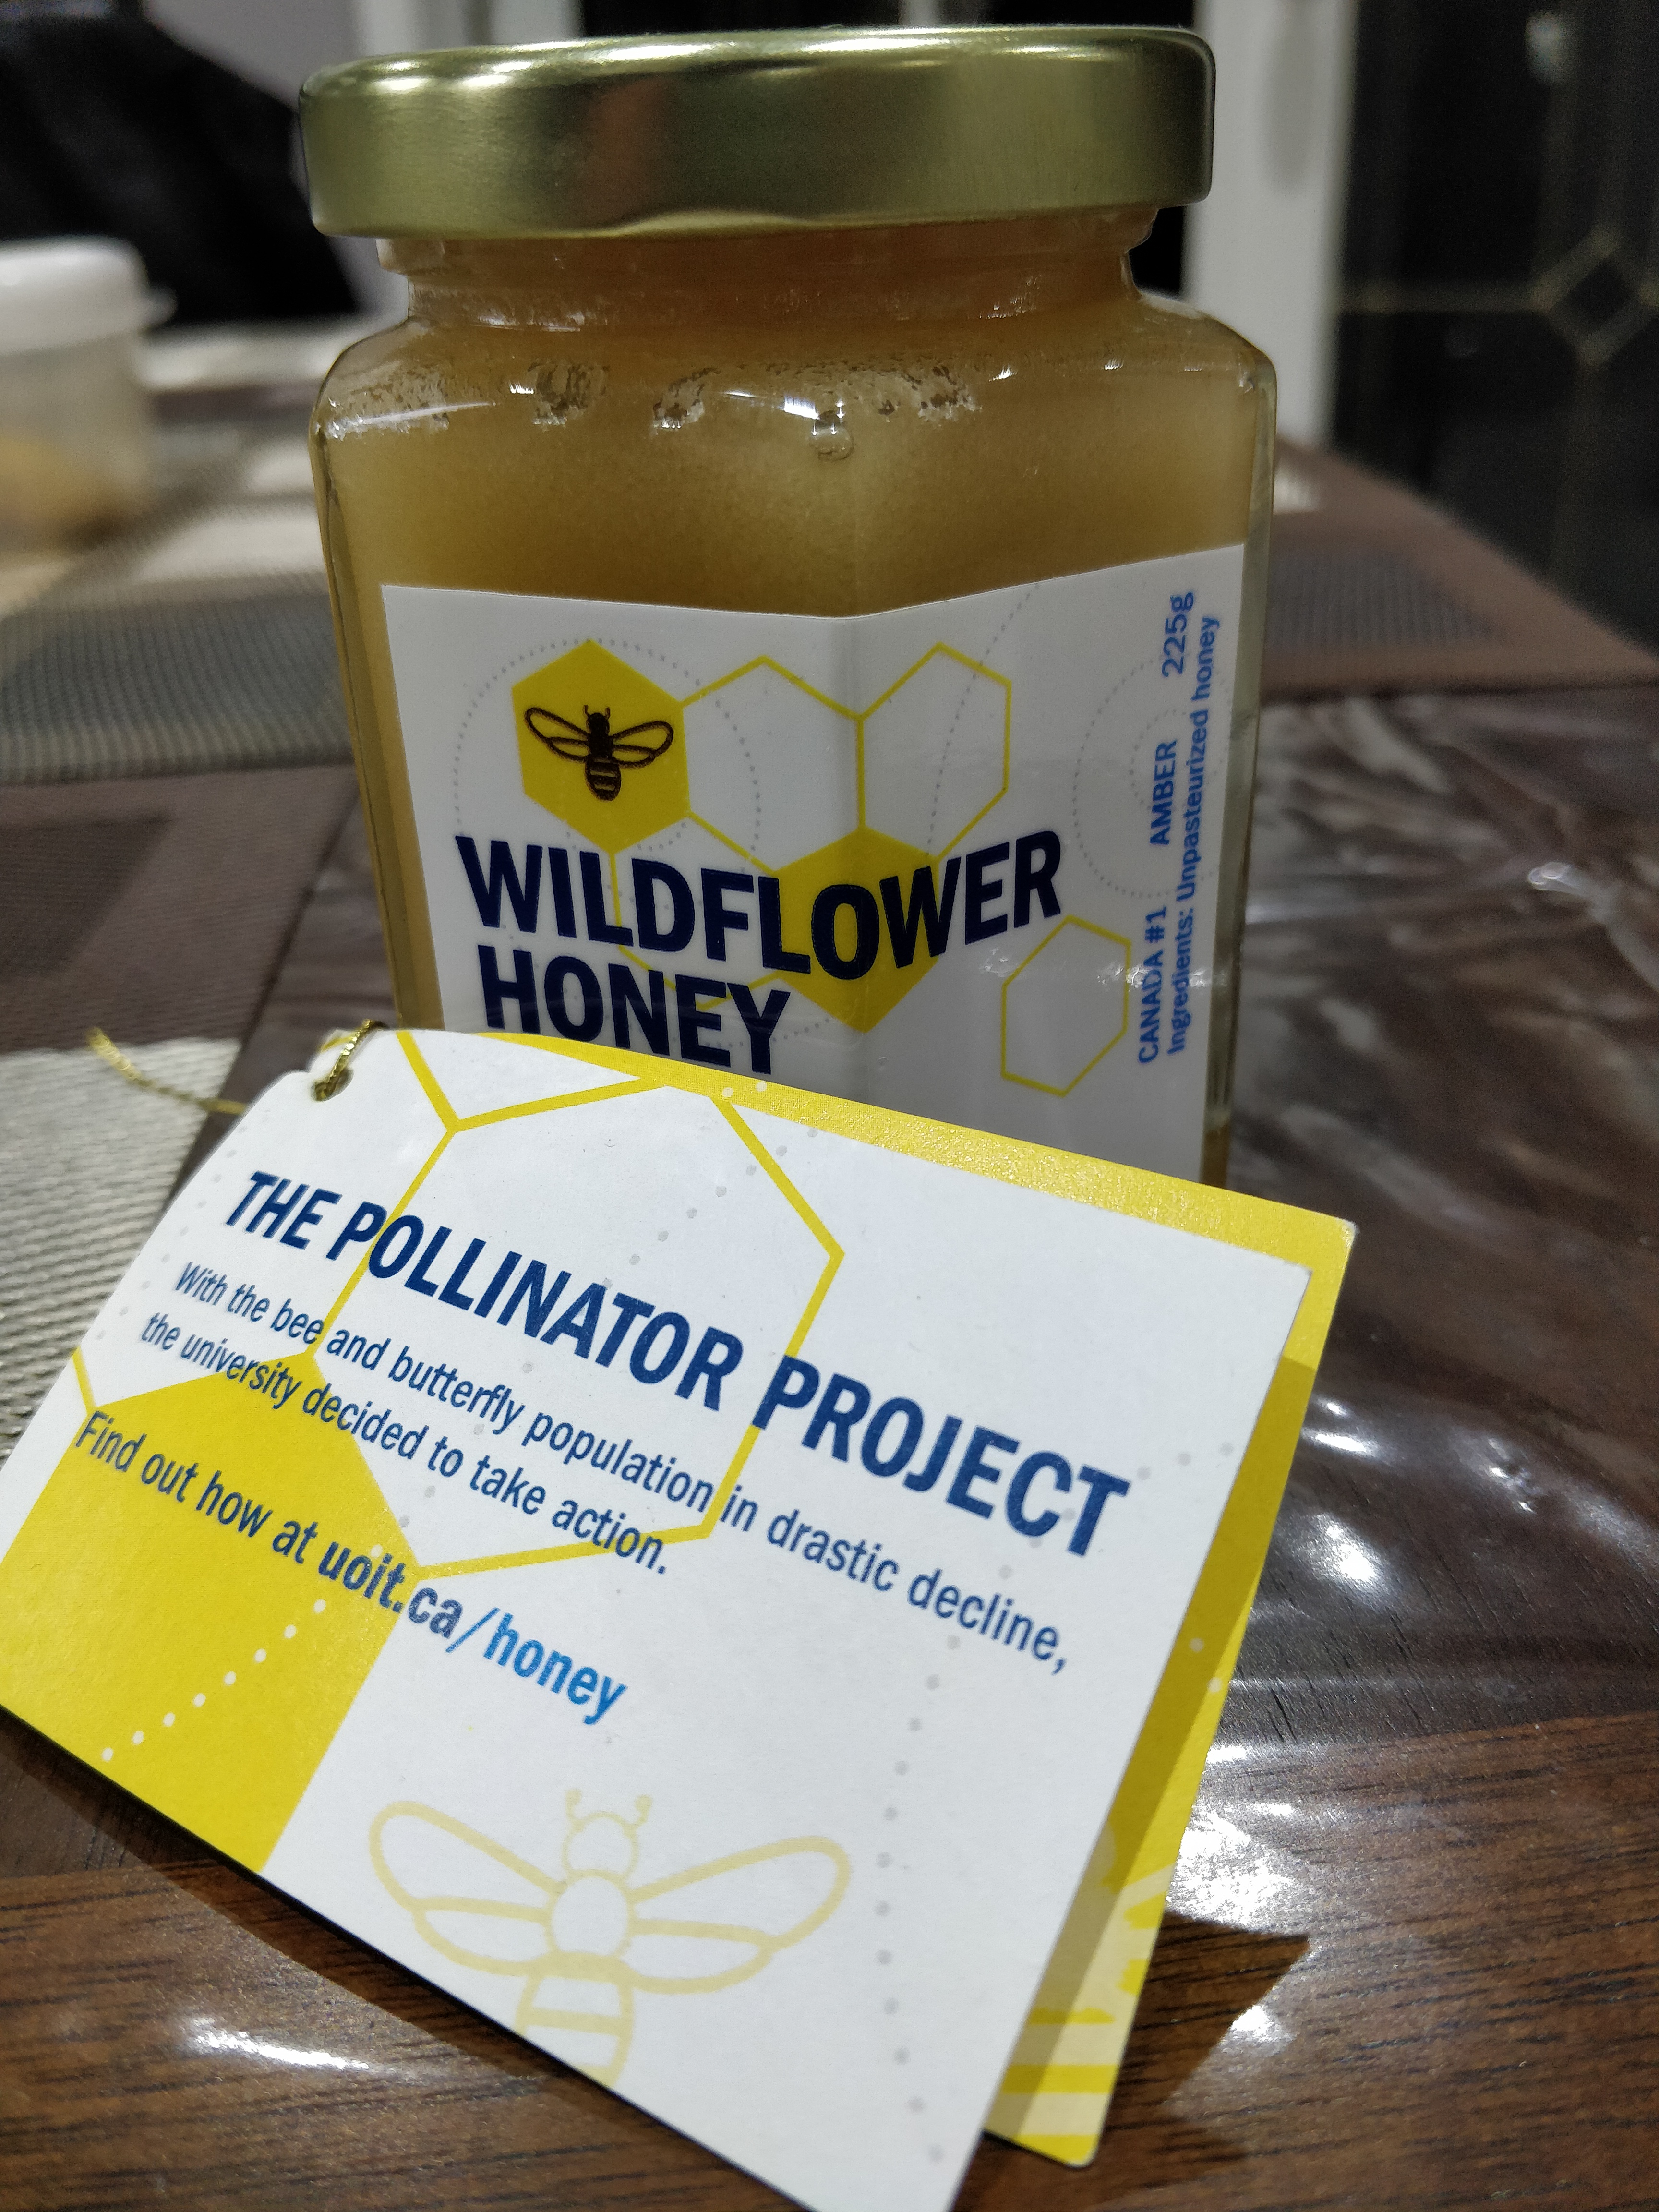 Ontario Tech's wildflower honey